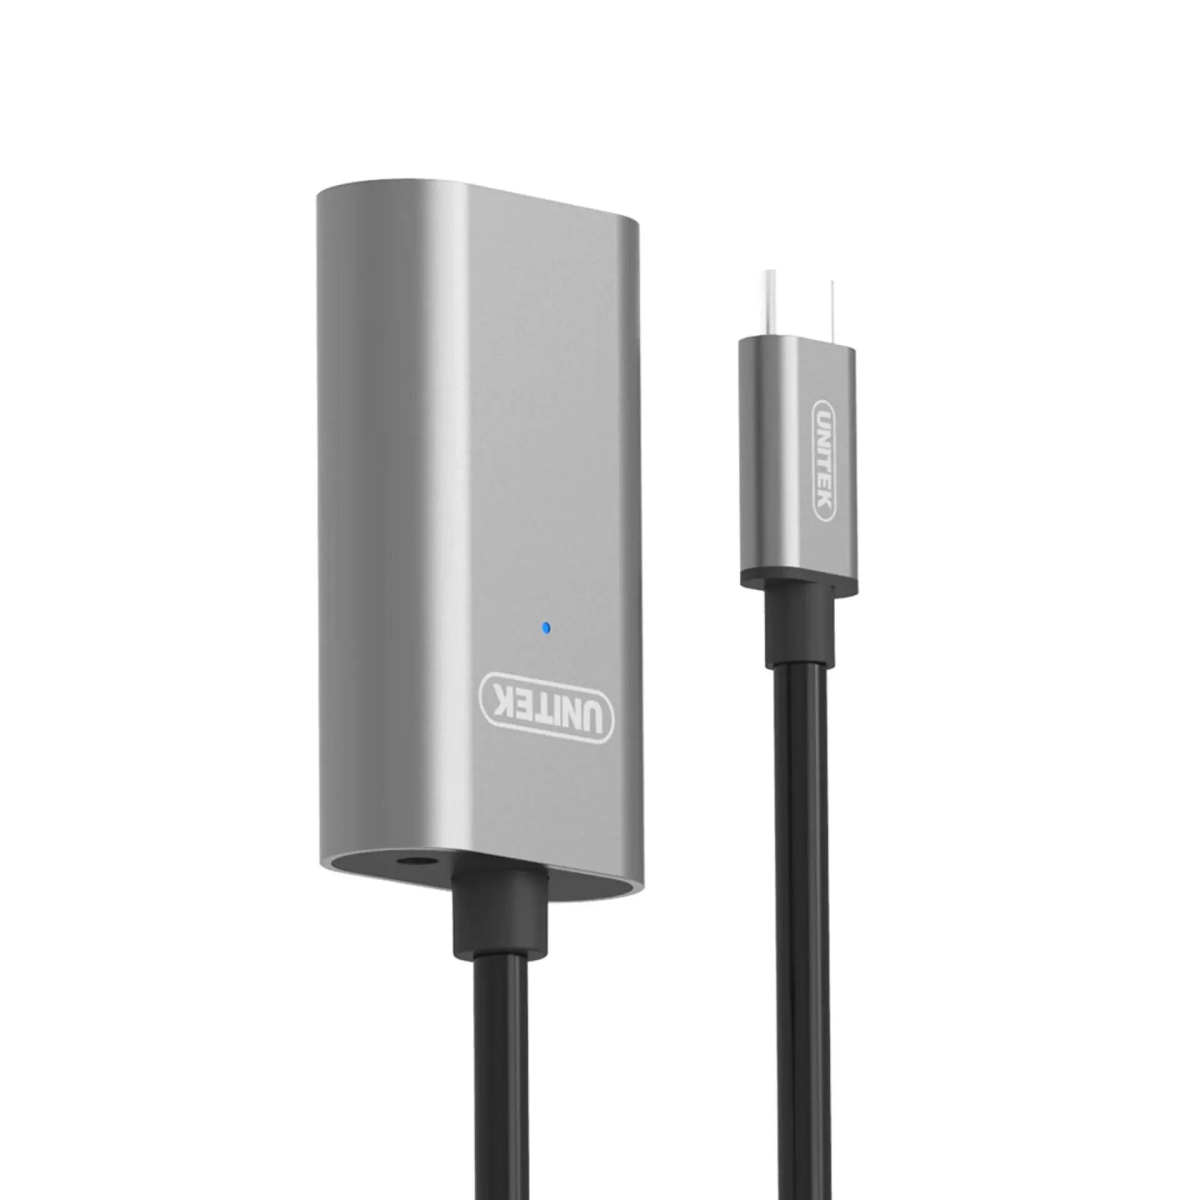 UNITEK U305A USB-Kabel